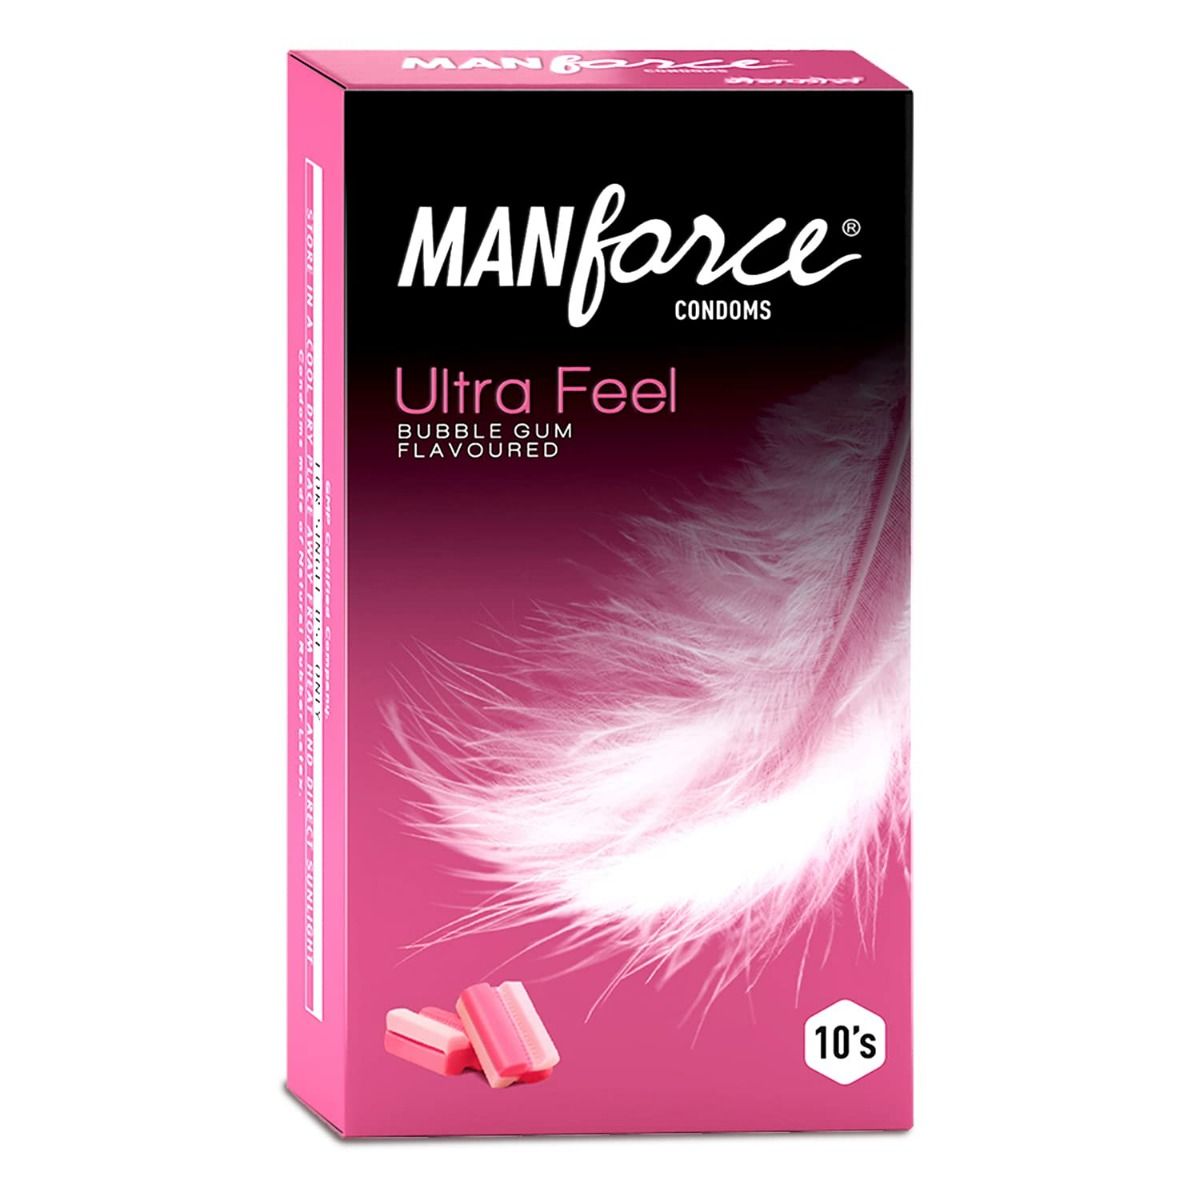 Buy Manforce Ultra Feel Bubble Gum Condoms, 10 Count Online